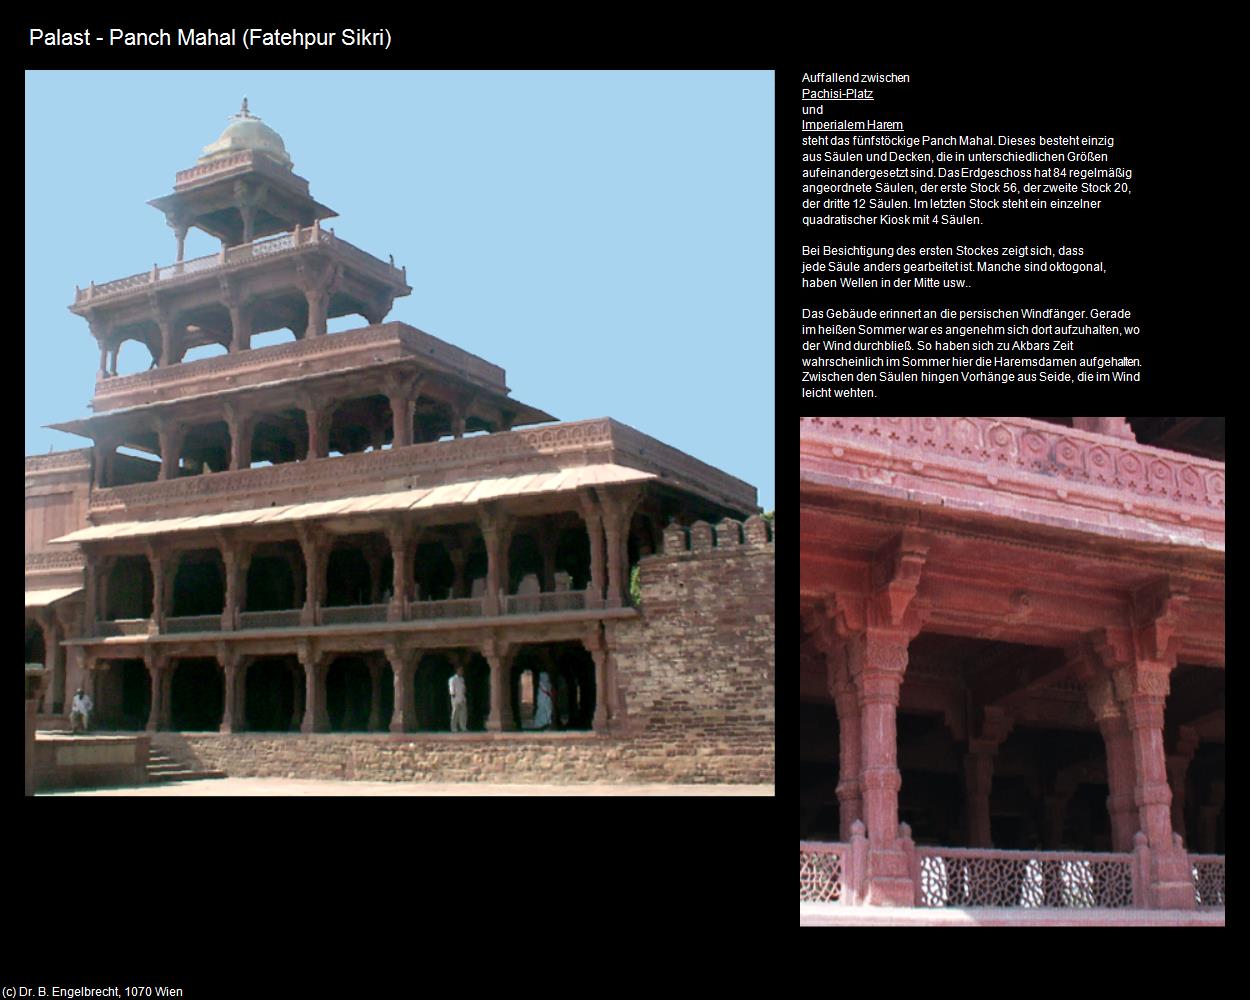 Palast - Panch Mahal (Fatehpur Sikri) in Rajasthan - das Land der Könige(c)B.Engelbrecht